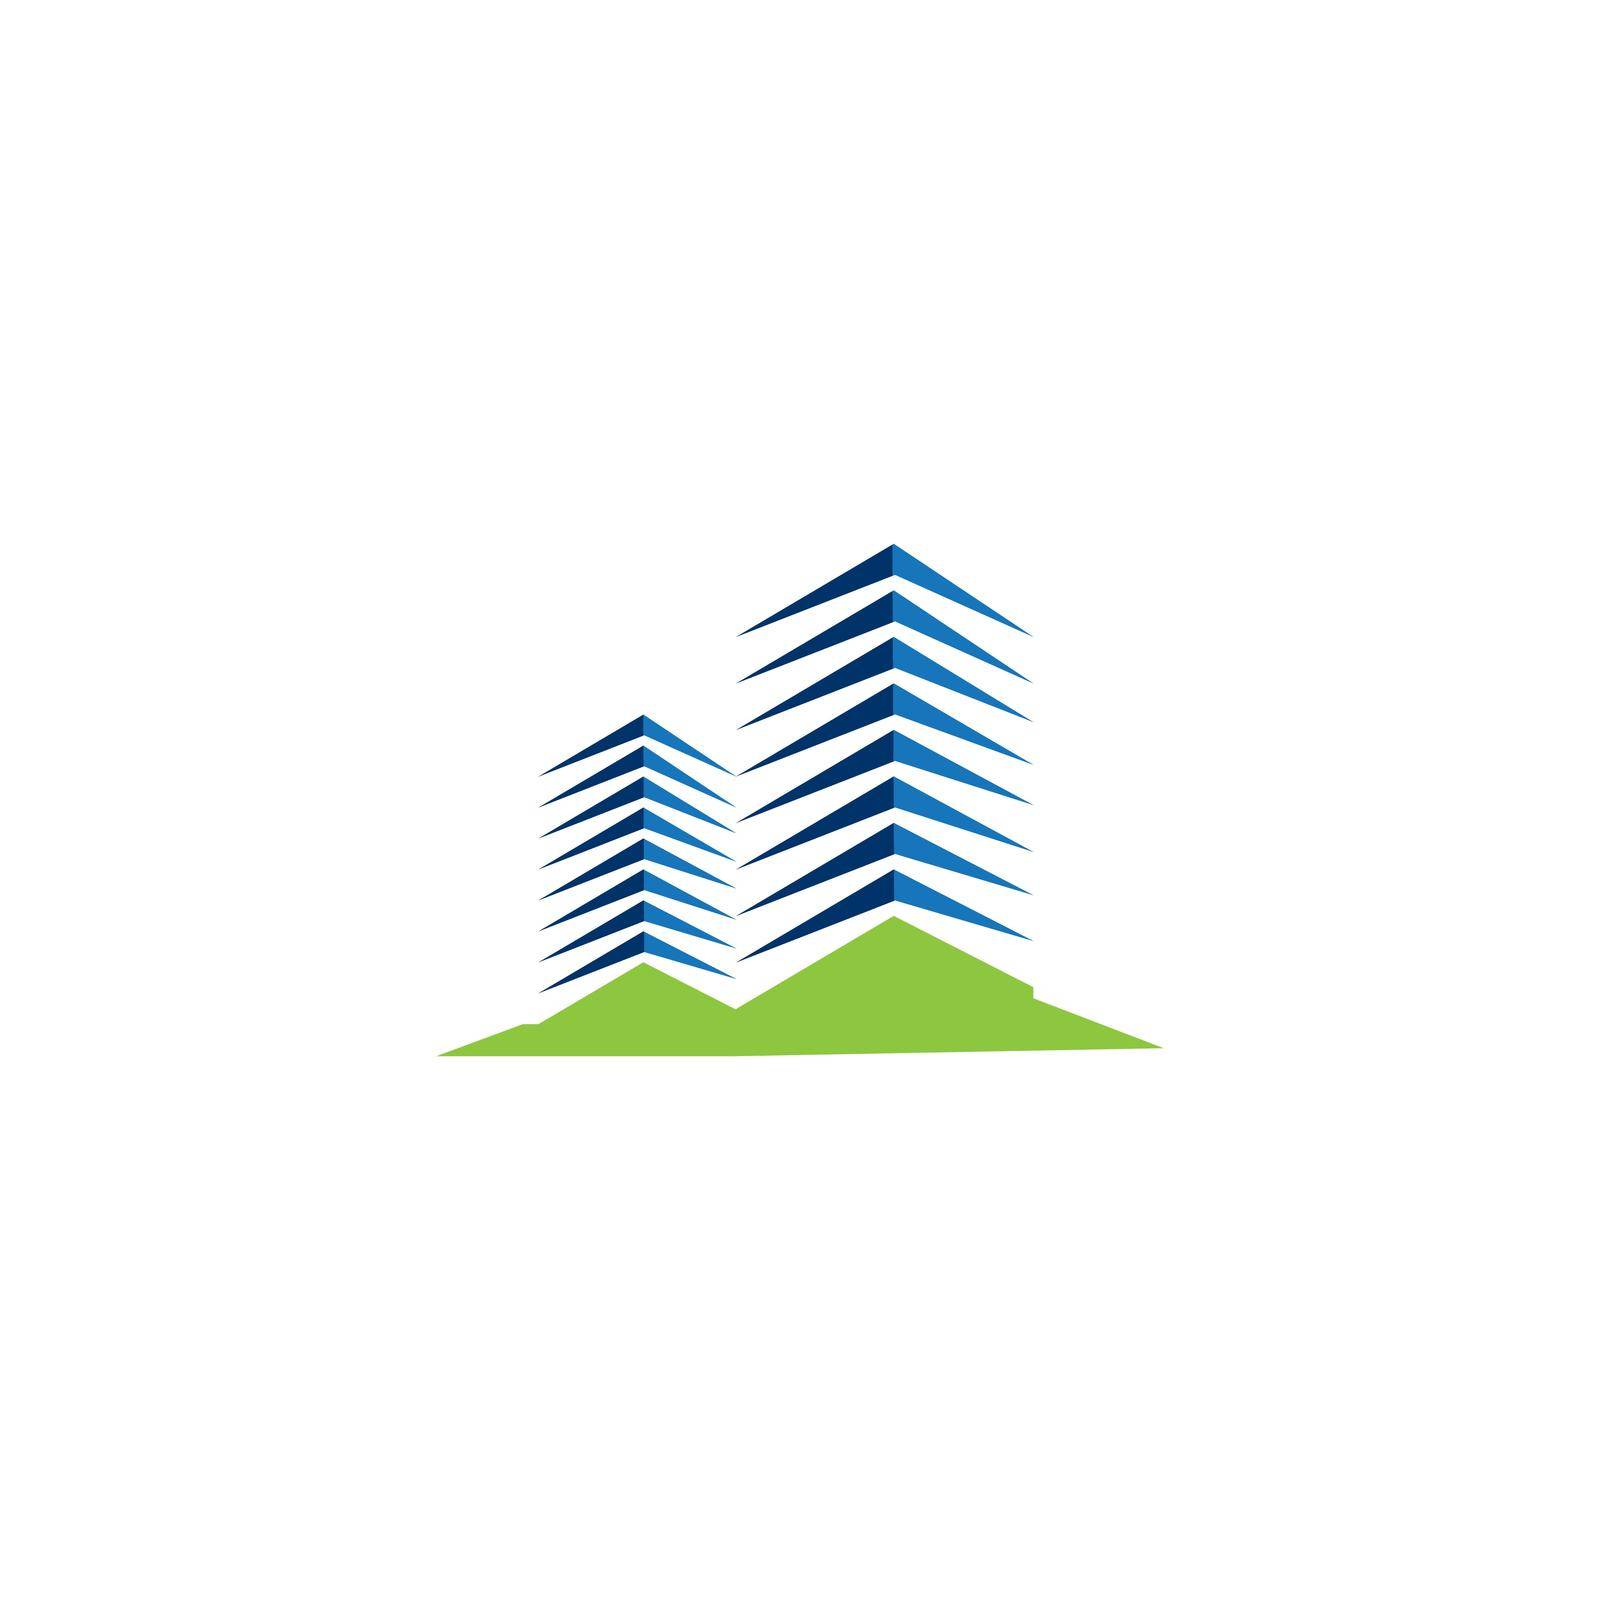 Real estate vector icon illustration logo design.